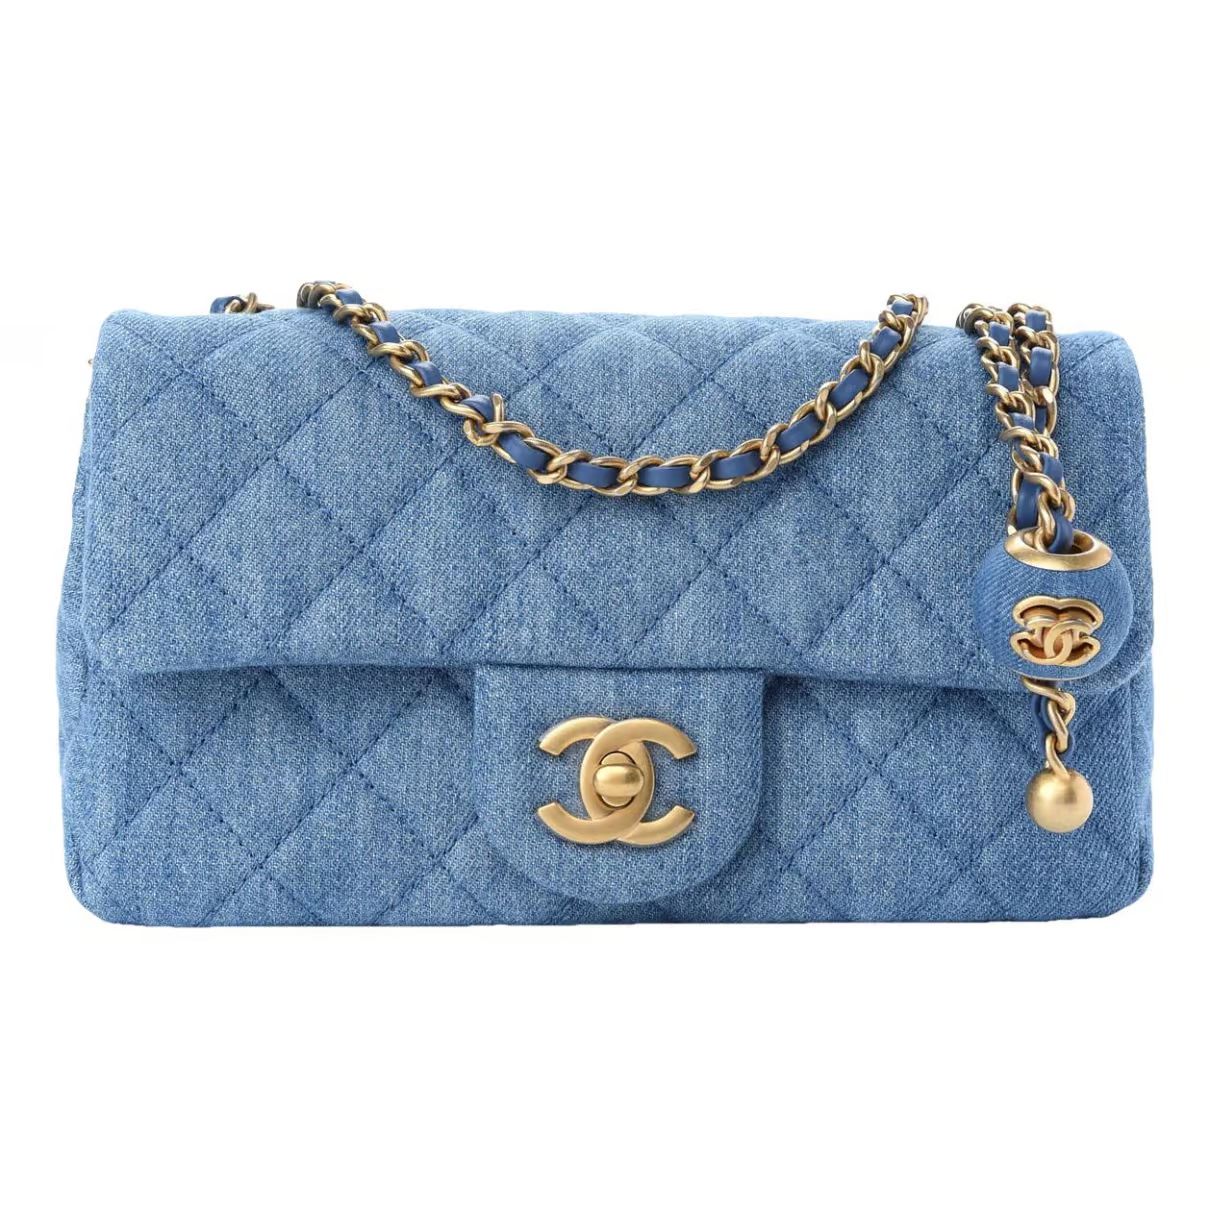 Timeless/Classique Chanel Handbags for Women - Vestiaire Collective | Vestiaire Collective (Global)